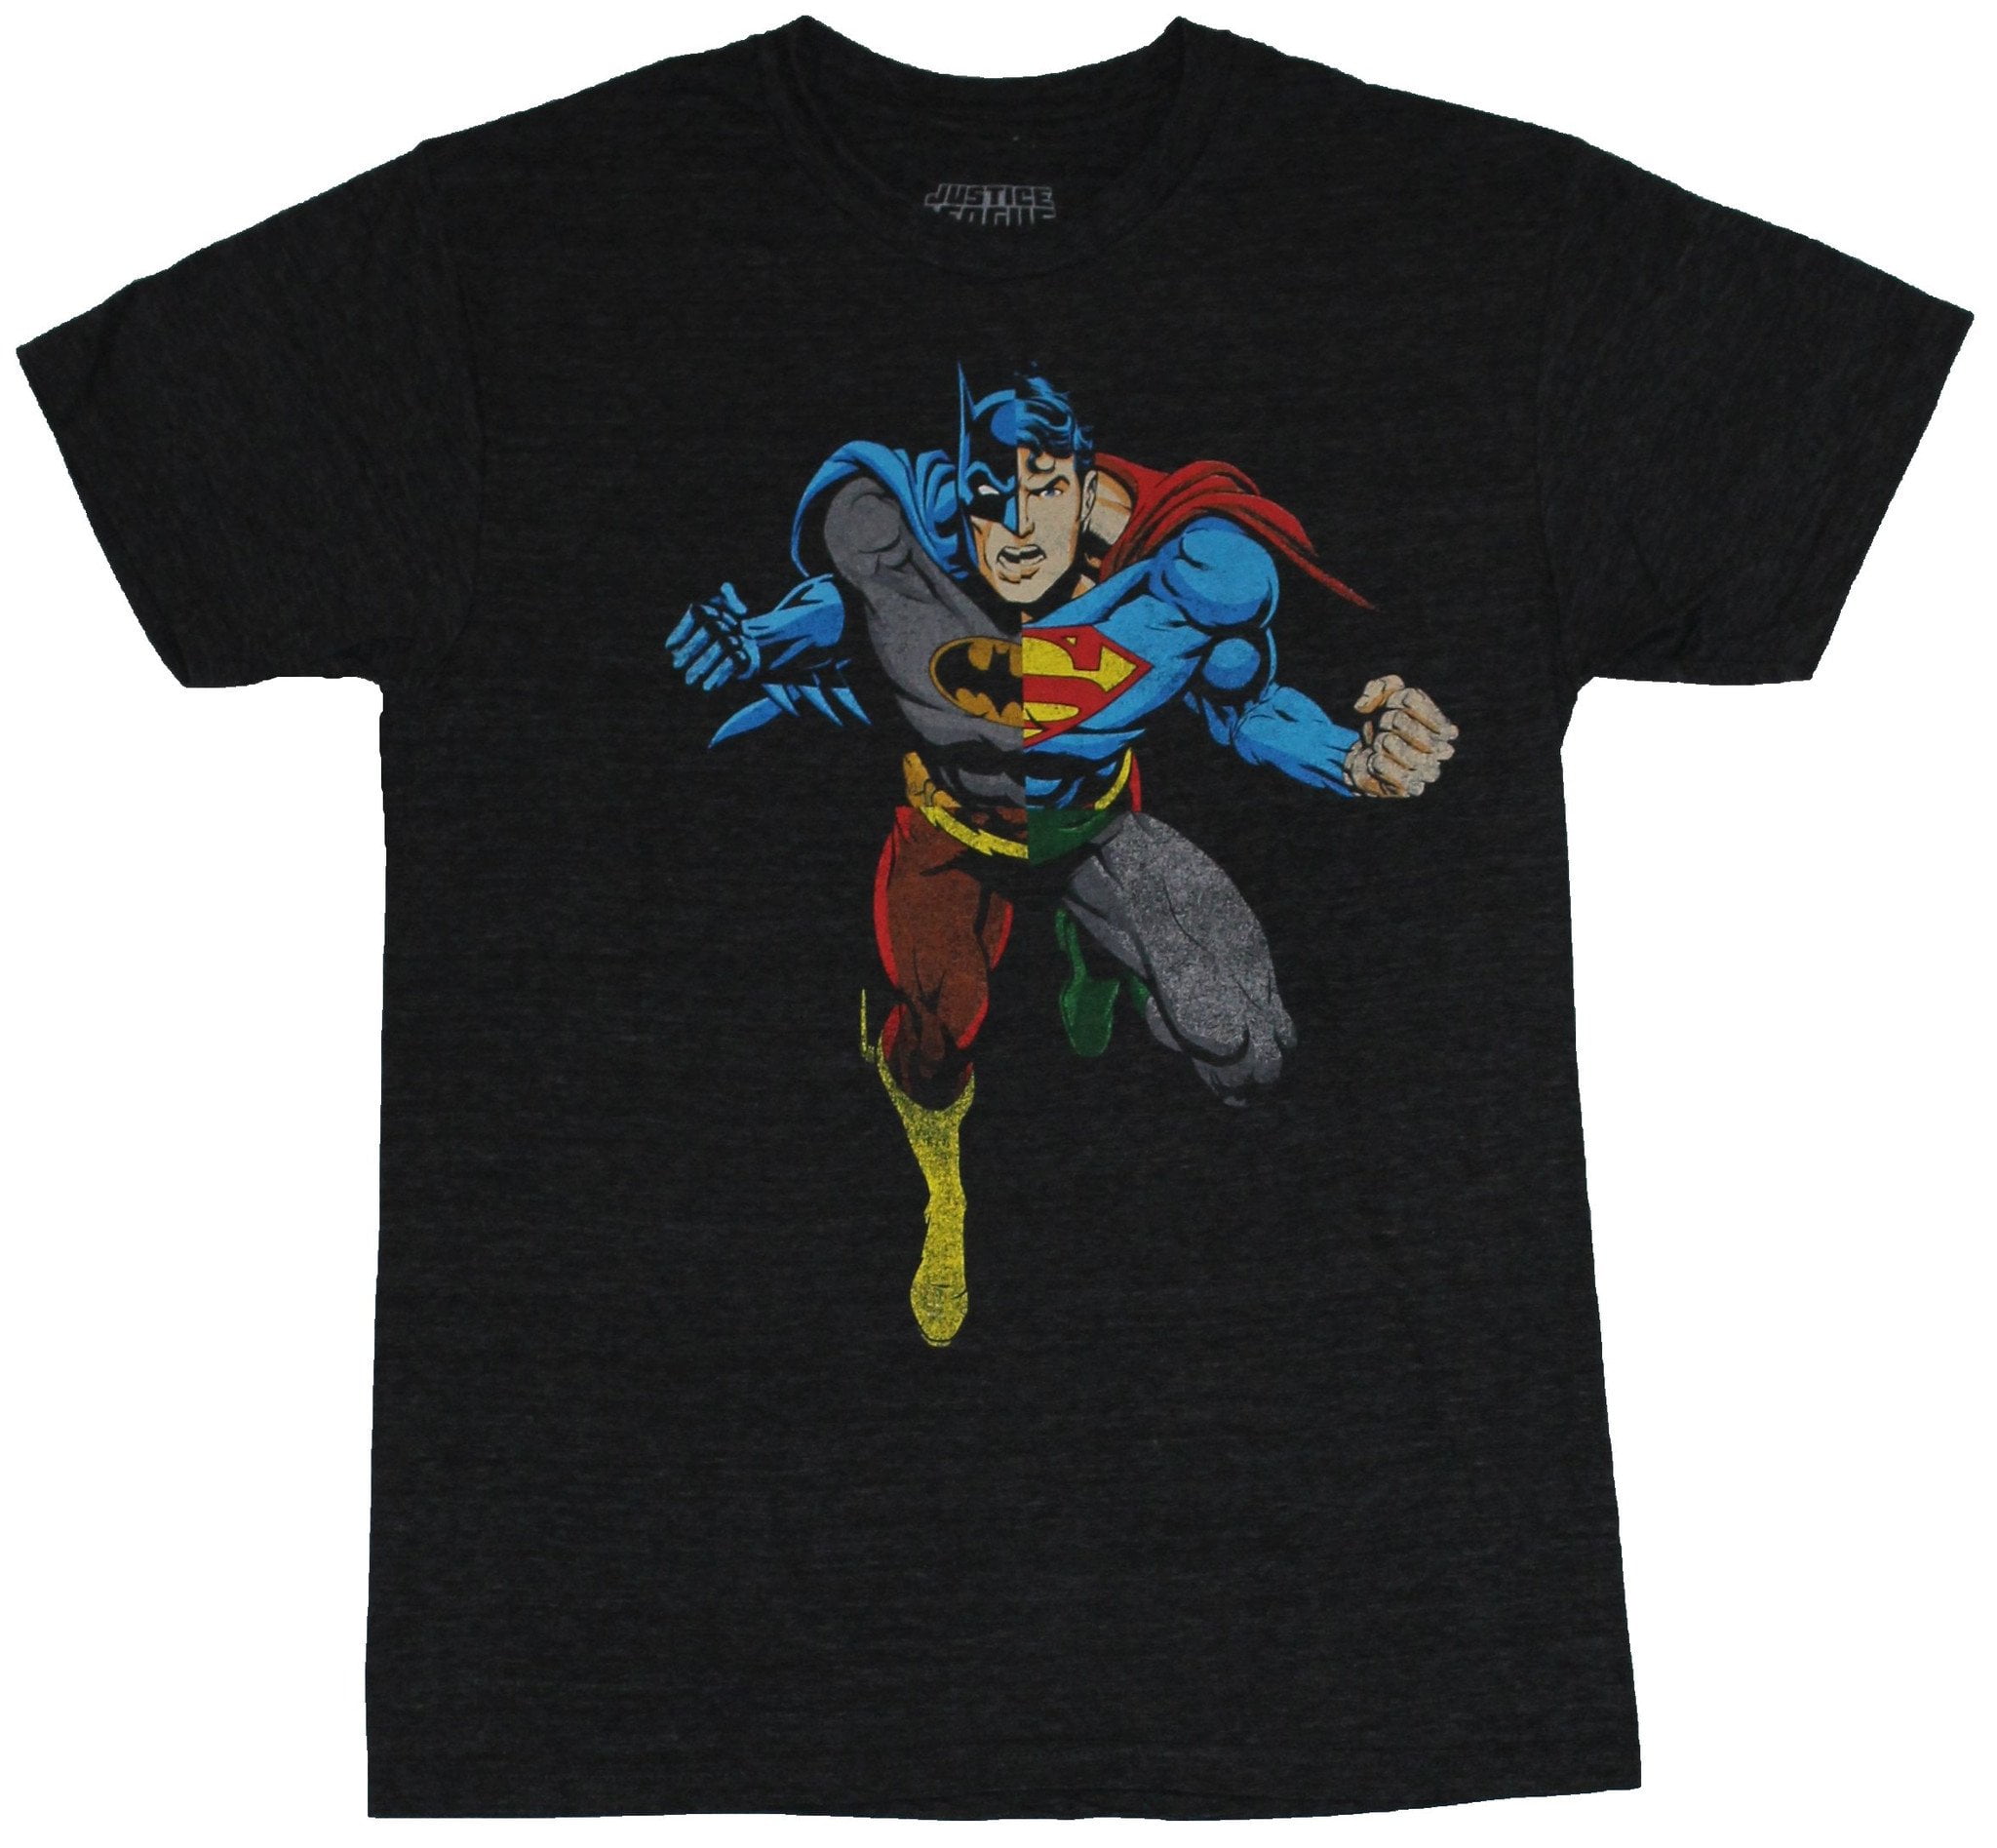 Justice League Boys Lightweight Sweatshirt Batman Superman Flash Green Lantern 